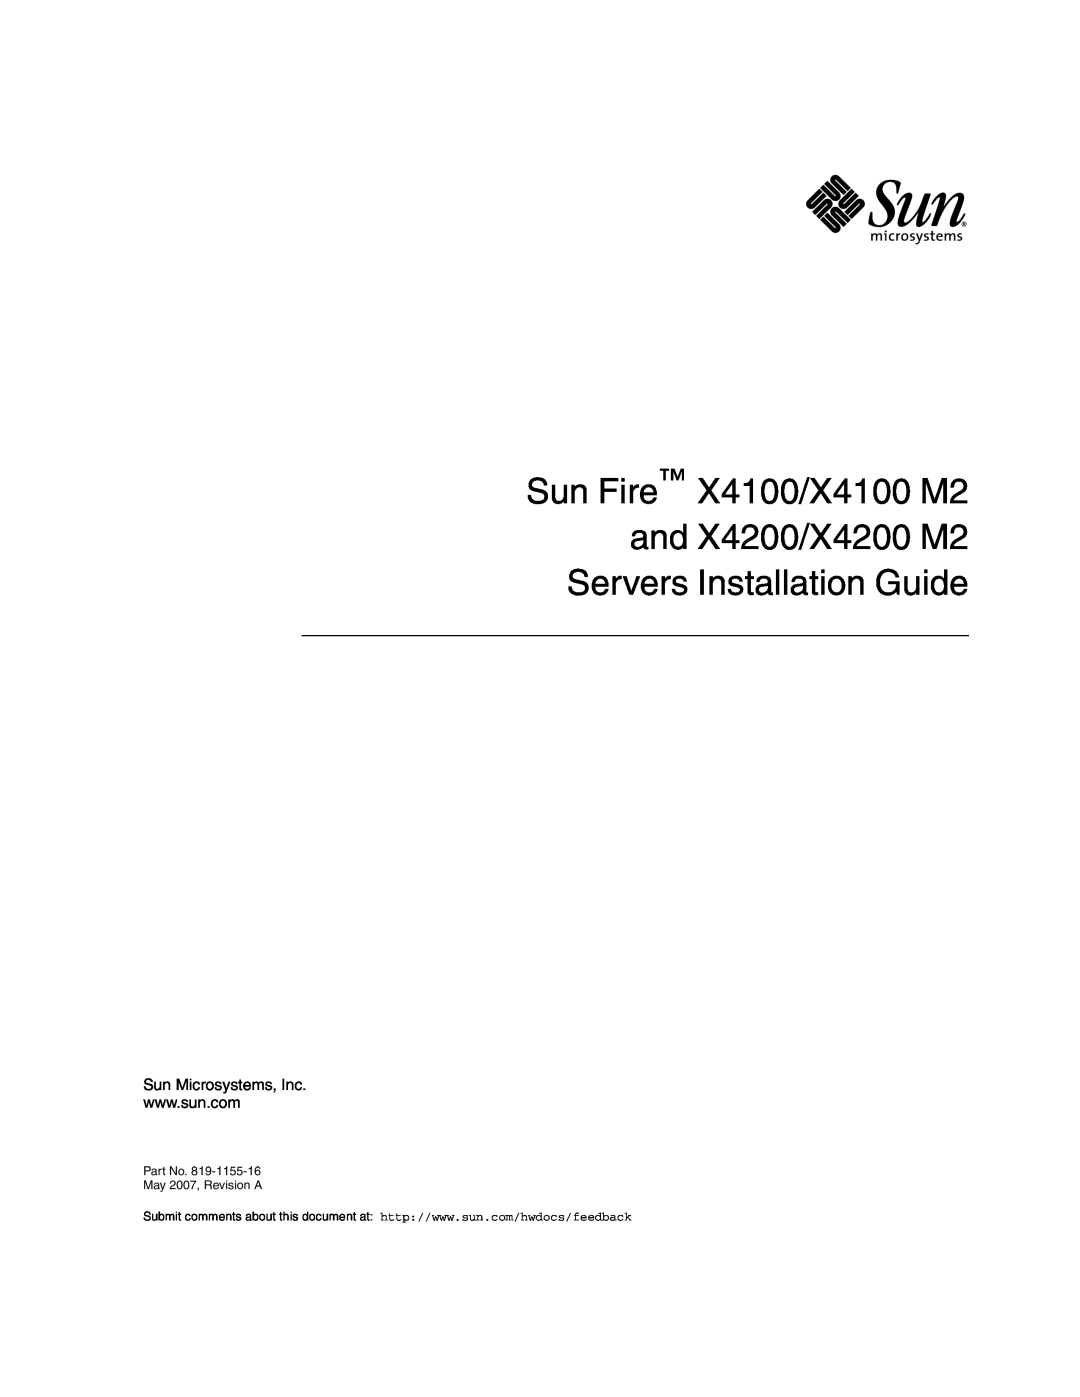 Sun Microsystems manual Sun Fire X4100/X4100 M2 and X4200/X4200 M2 Servers Installation Guide, Sun Microsystems, Inc 